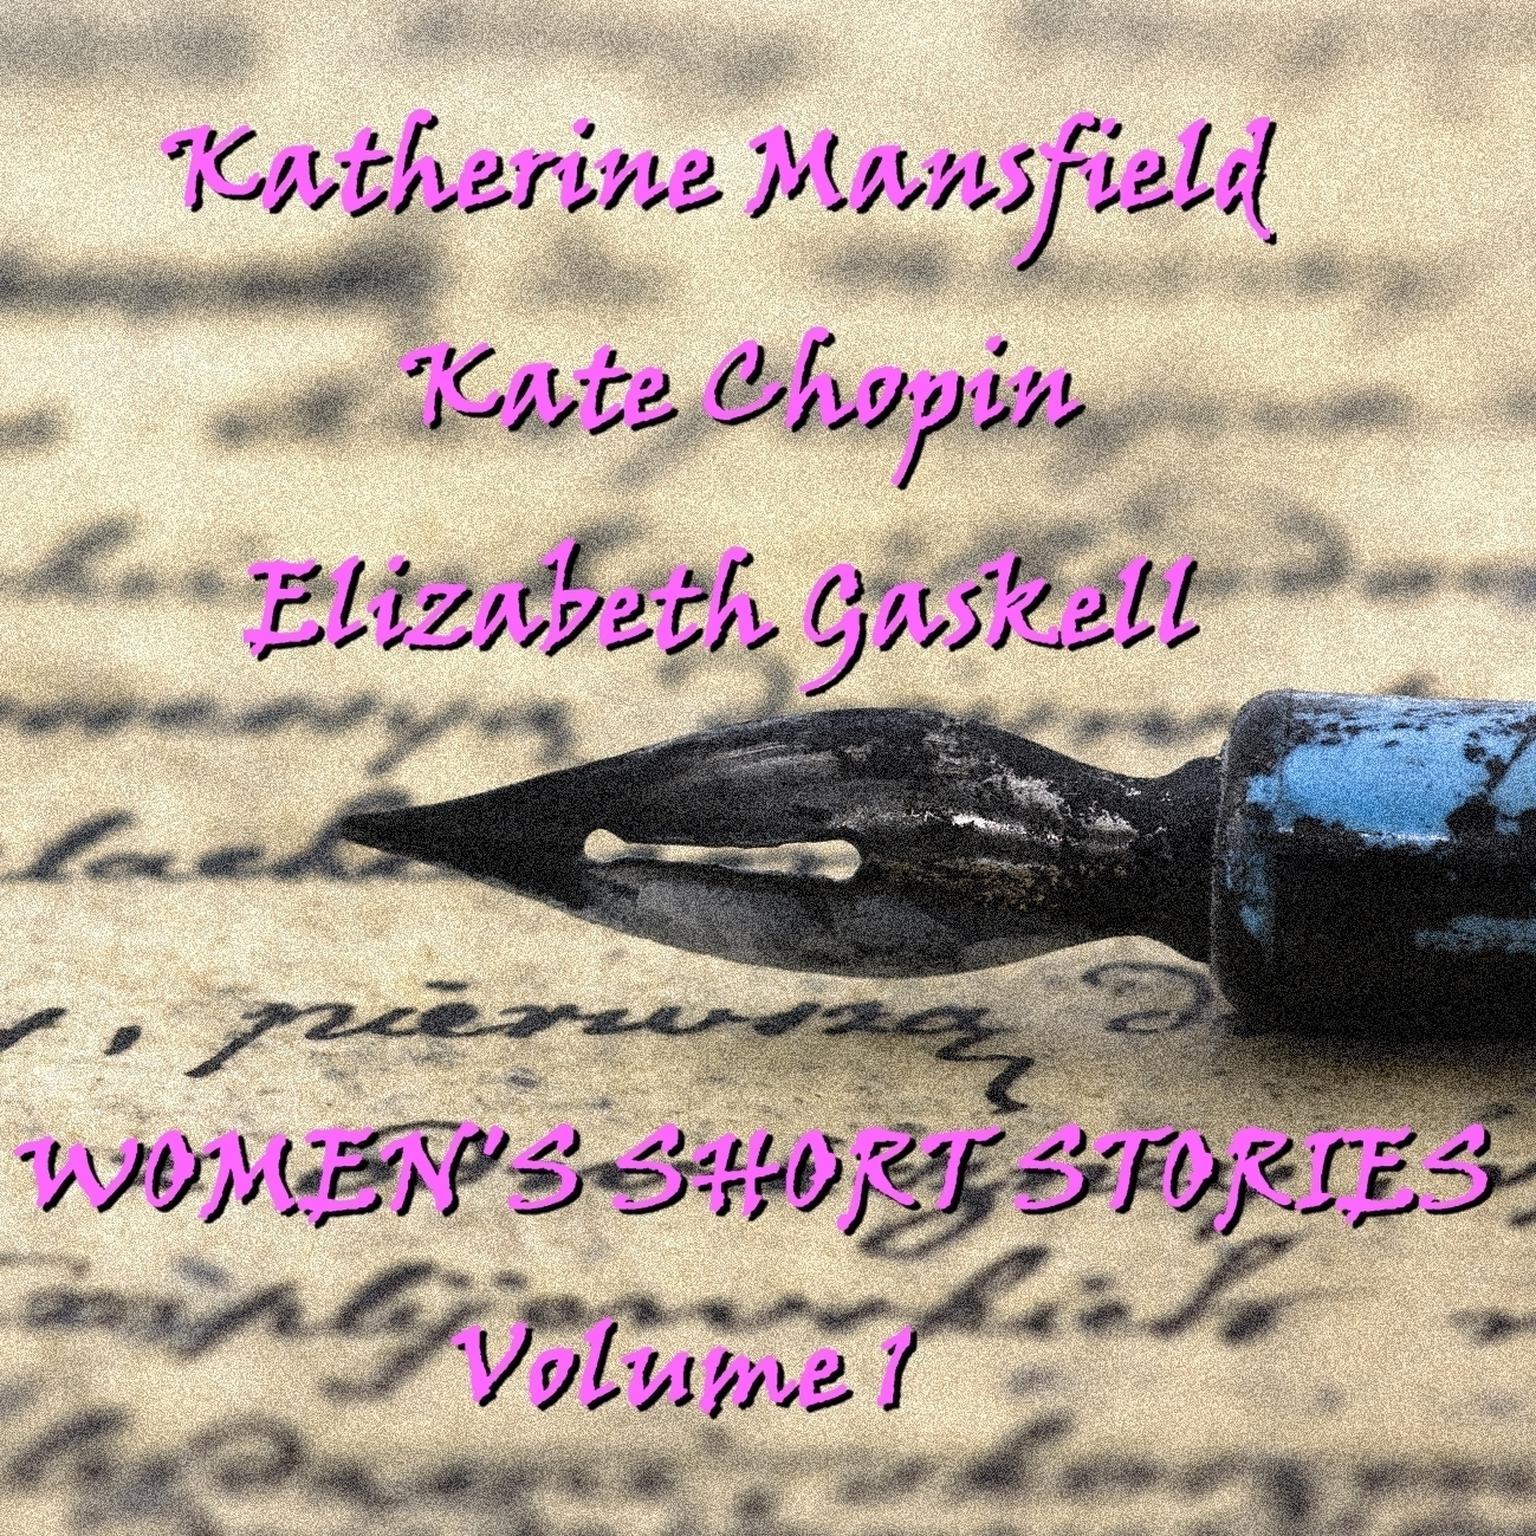 Women’s Short Stories, Vol. 1: Katherine Mansfield, Kate Chopin, and Elizabeth Gaskell Audiobook, by Katherine Mansfield